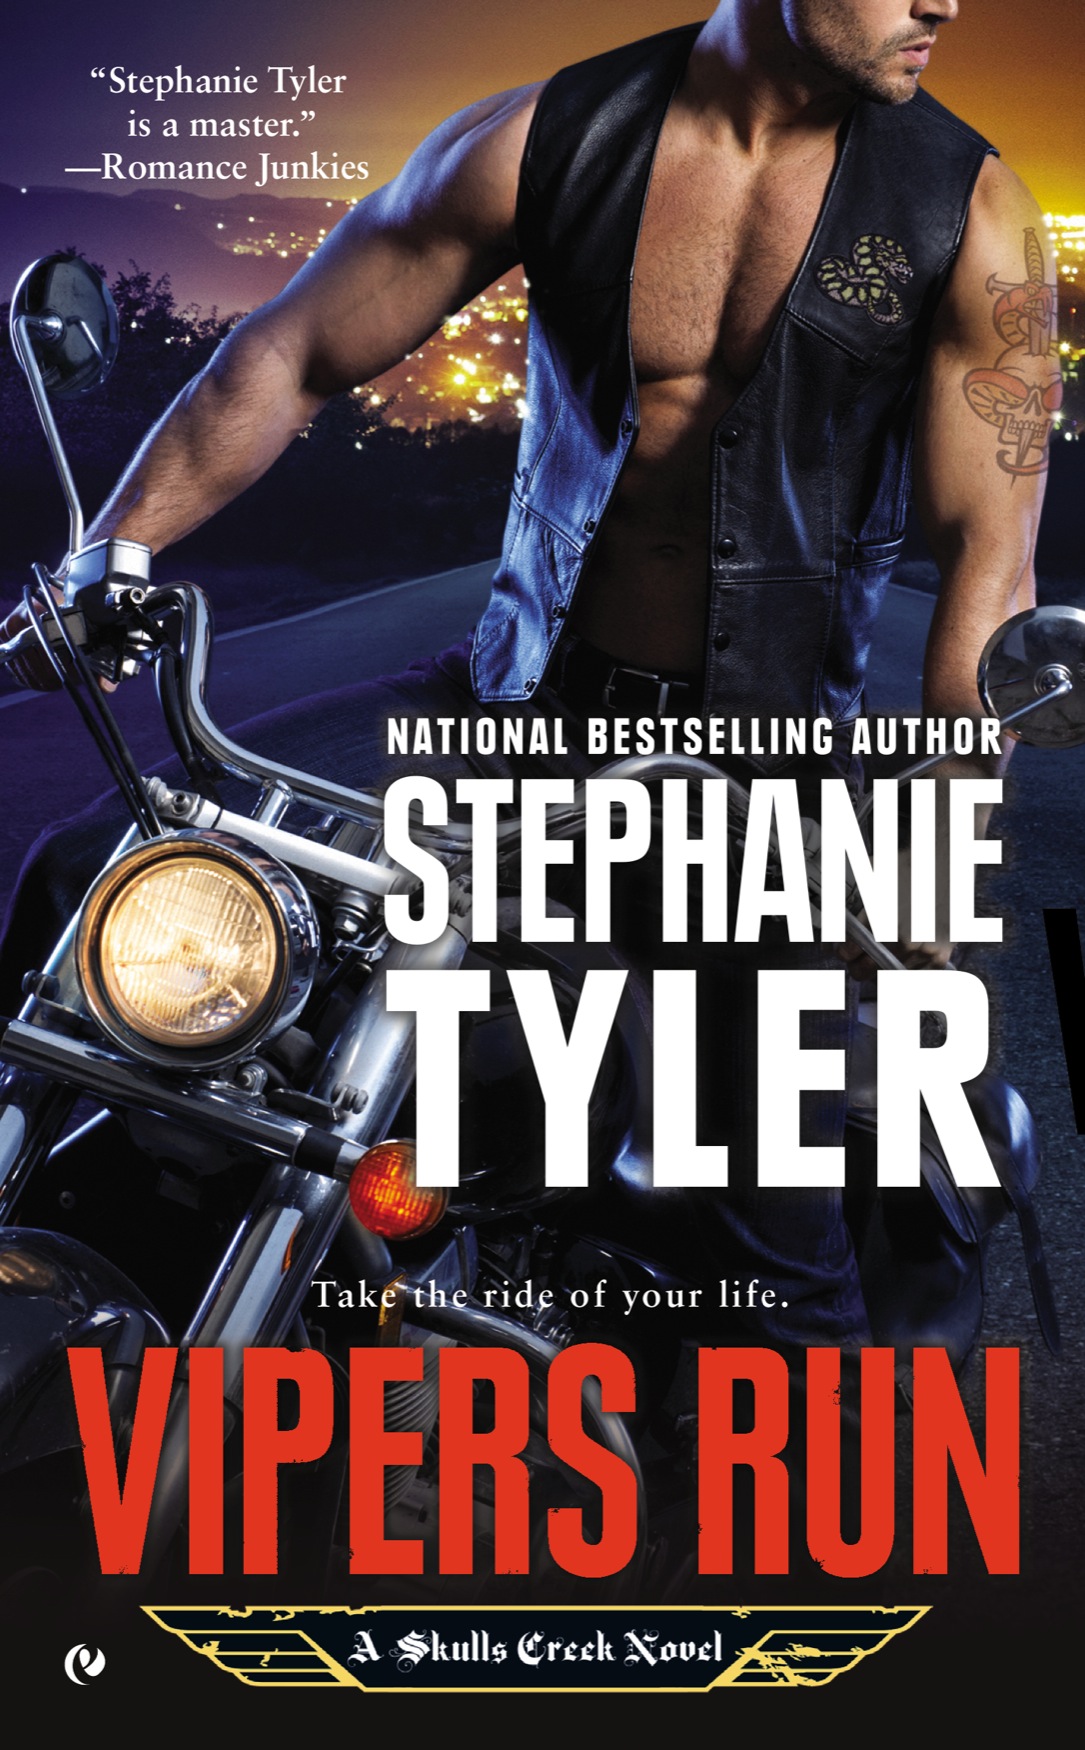 Vipers Run (2014) by Stephanie Tyler